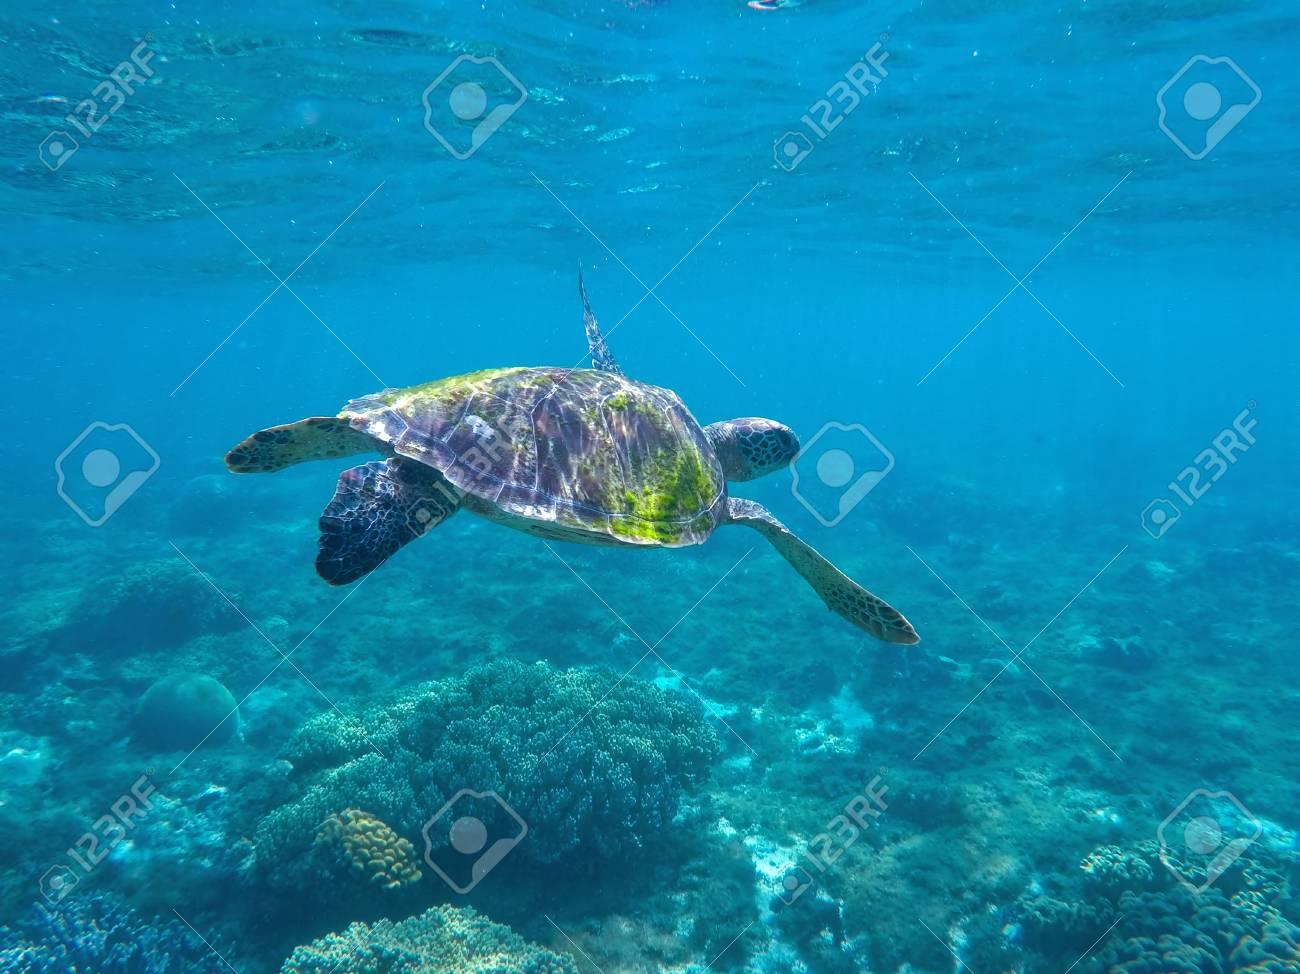 Sea Turtle In Blue Water Green Sea Turtle Seeking For Food In